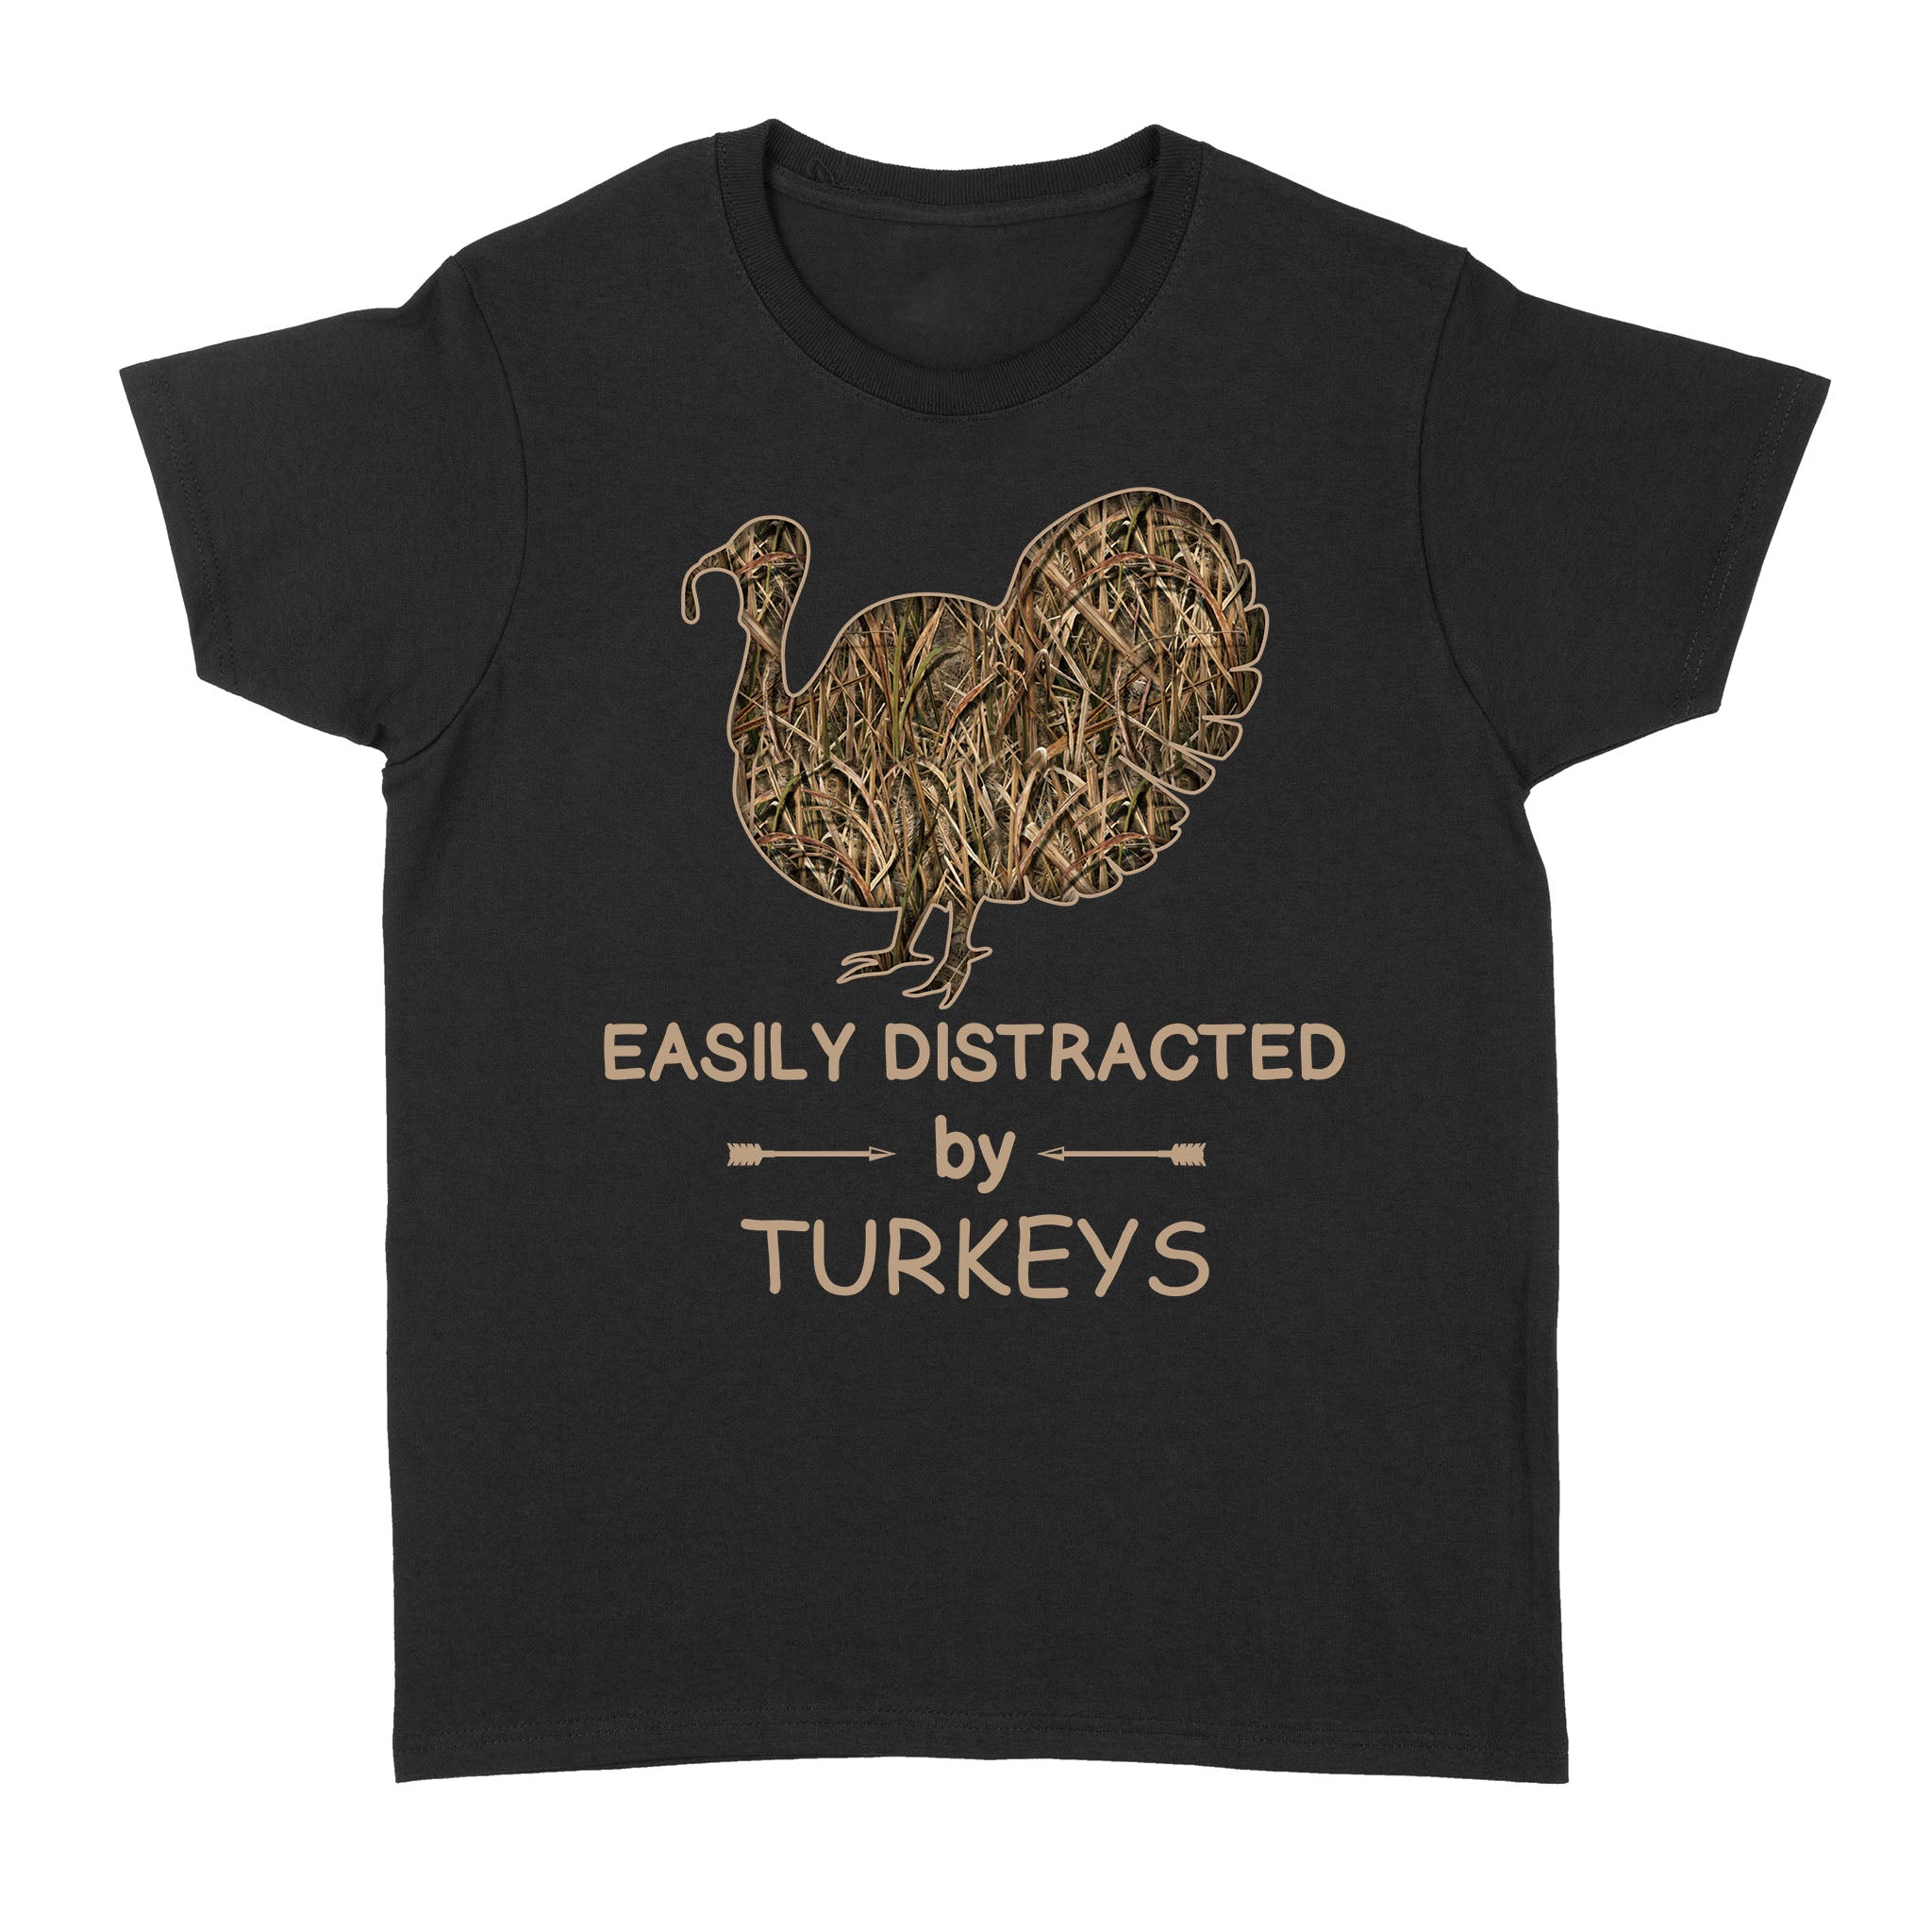 Men Women Turkey hunting camo shirt "Easily distracted by Turkeys" women's T-shirt, Gift for hunter - FSD1266D06